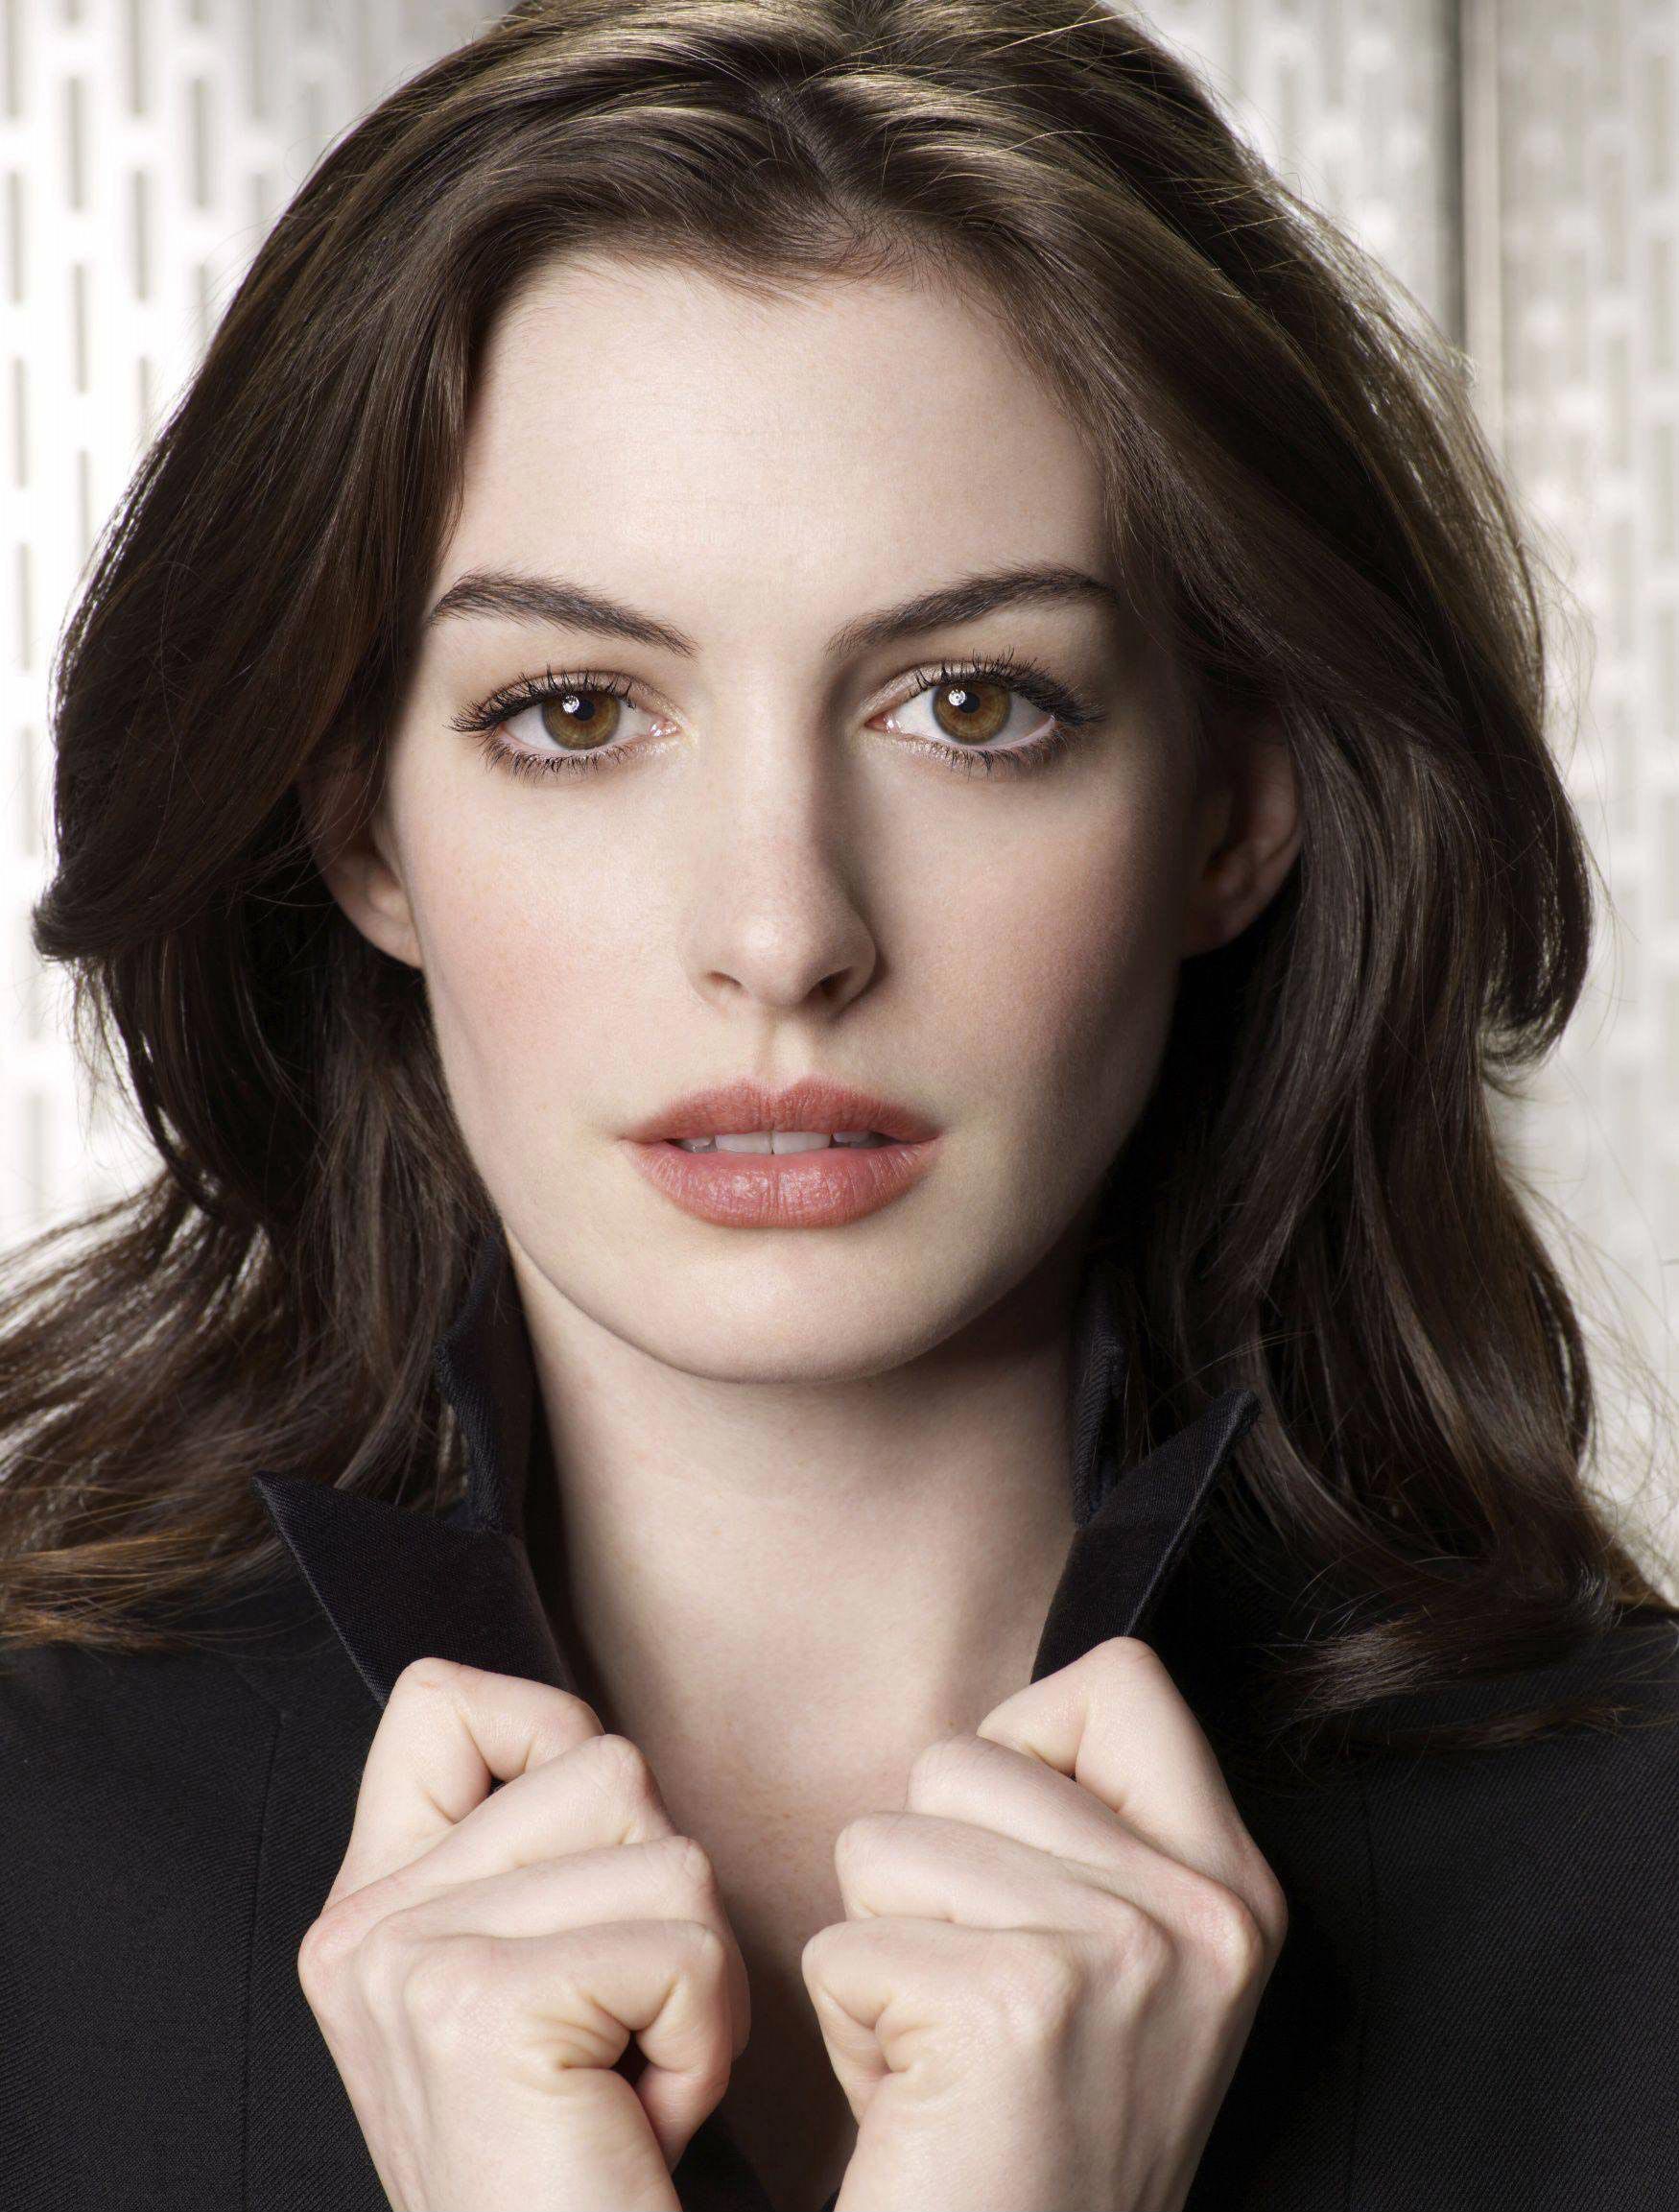 Anne Hathaway | Disney Wiki | FANDOM powered by Wikia